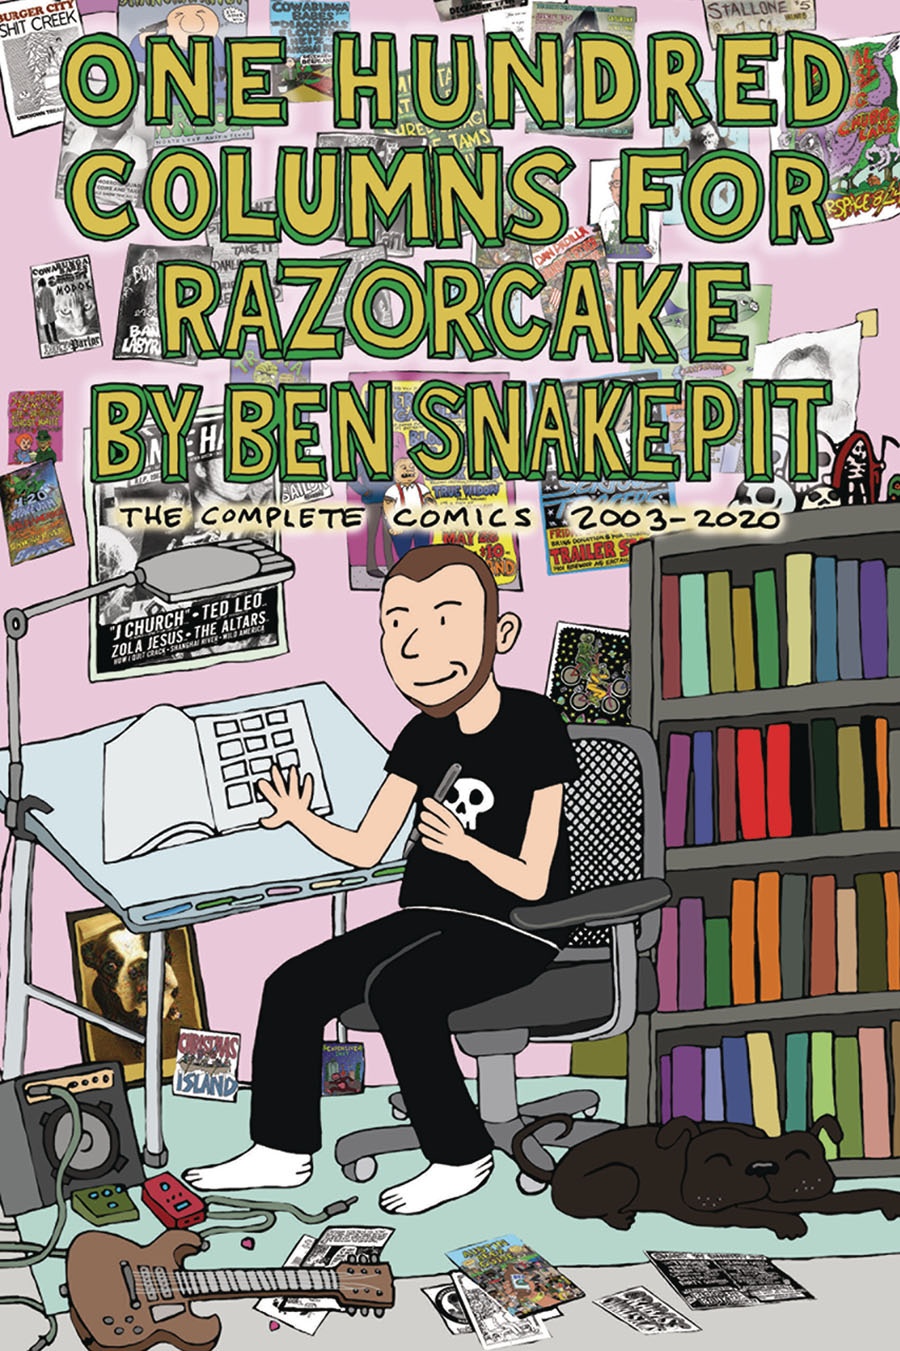 One Hundred Columns For Razorcake By Ben Snakepit Complete Comics 2003-2020 TP